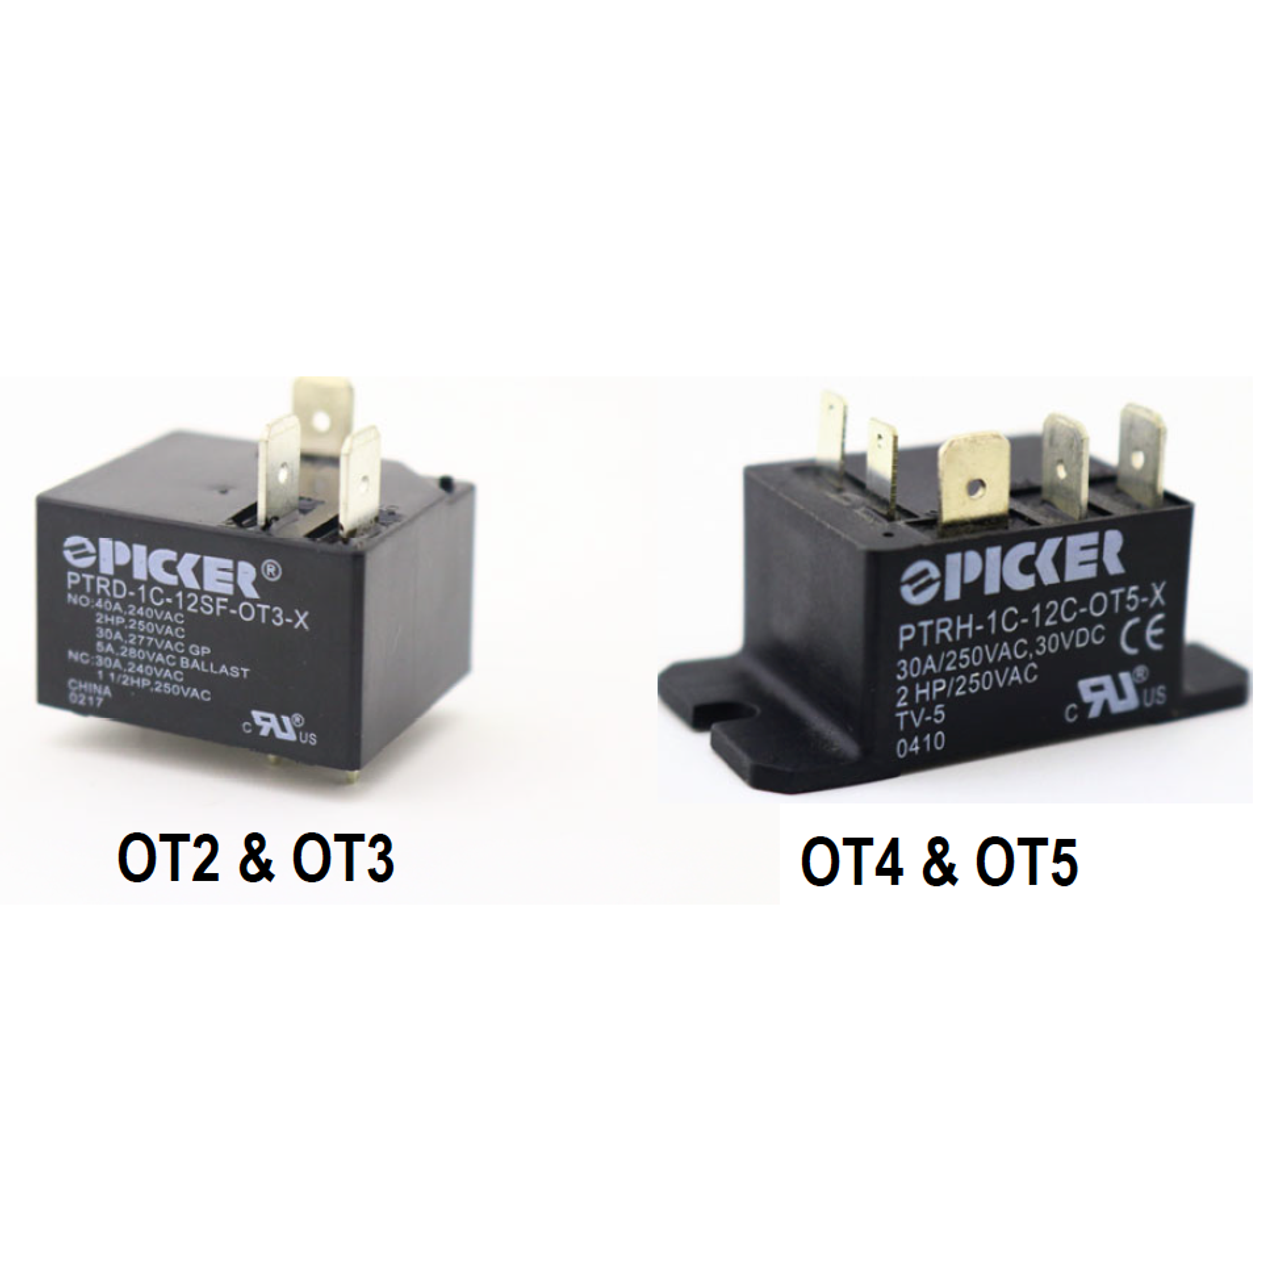 Picker PTRH-1C-110SF-OT5-XA Power Relays